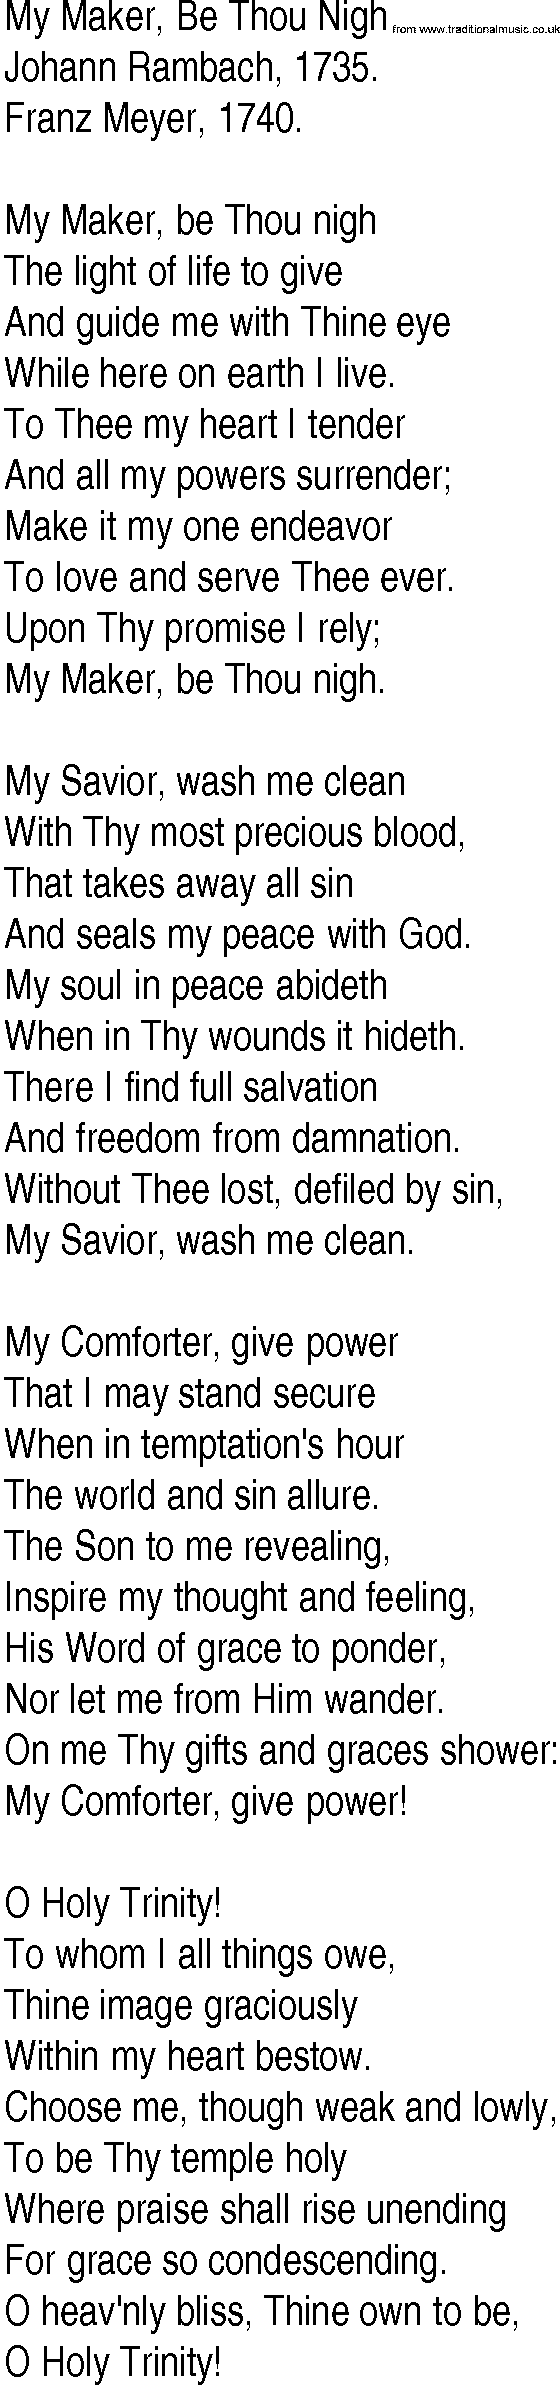 Hymn and Gospel Song: My Maker, Be Thou Nigh by Johann Rambach lyrics